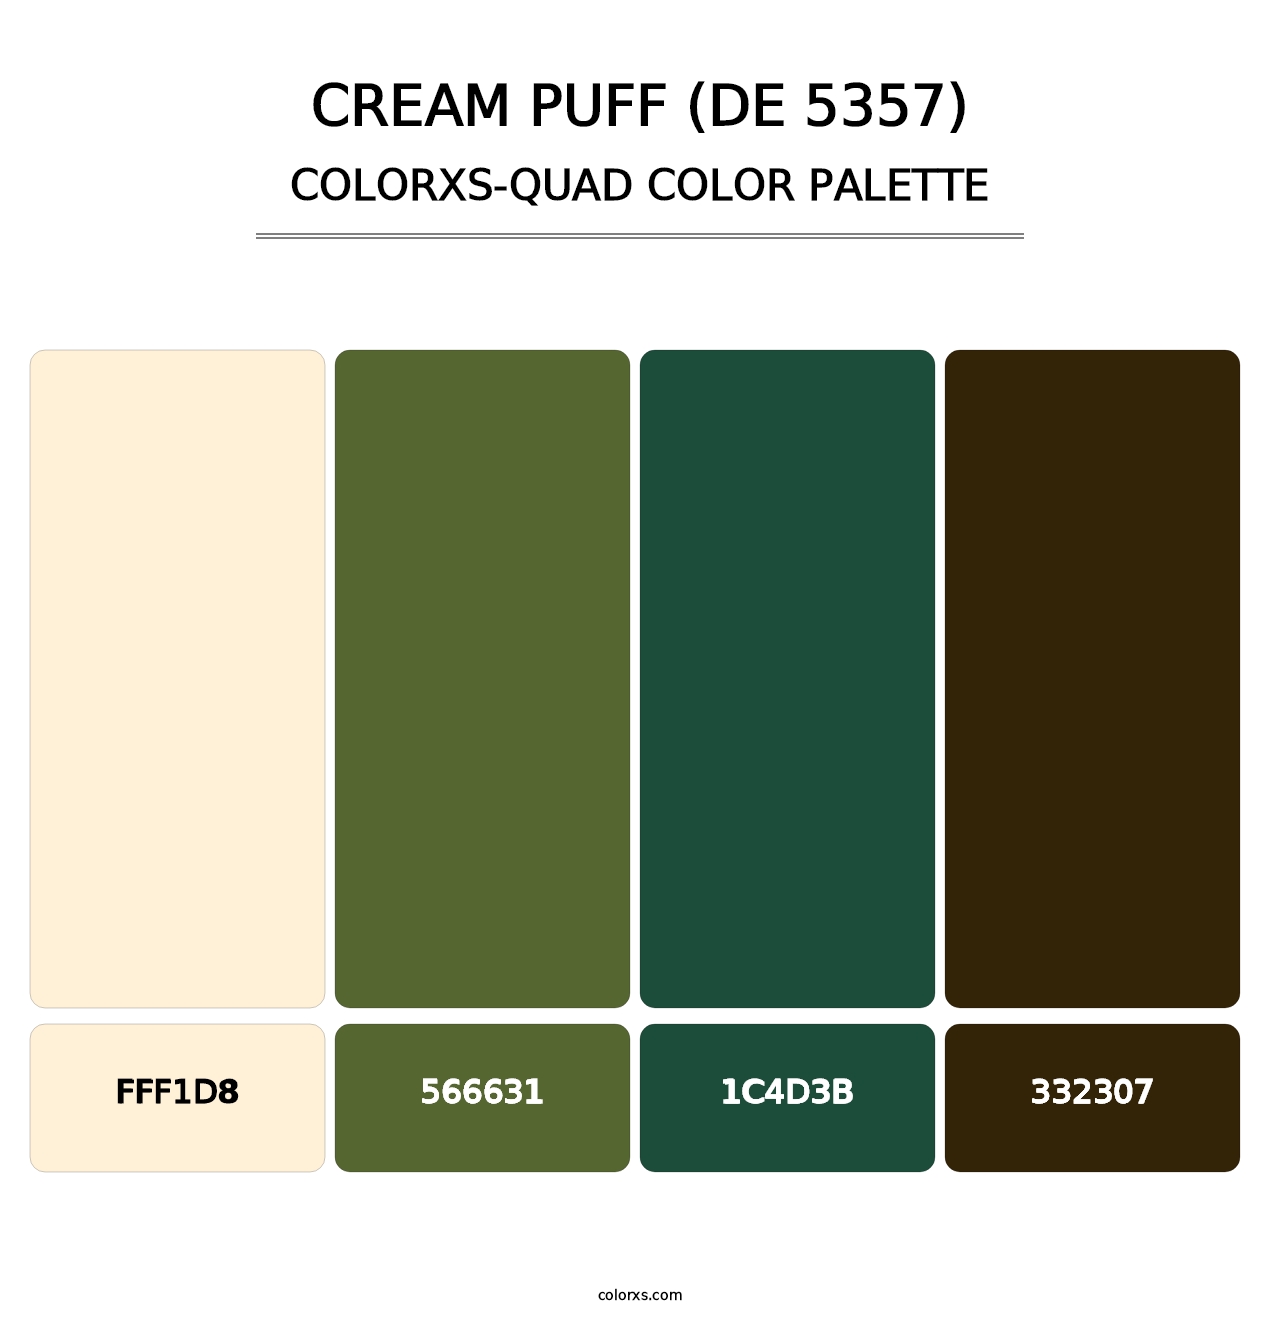 Cream Puff (DE 5357) - Colorxs Quad Palette